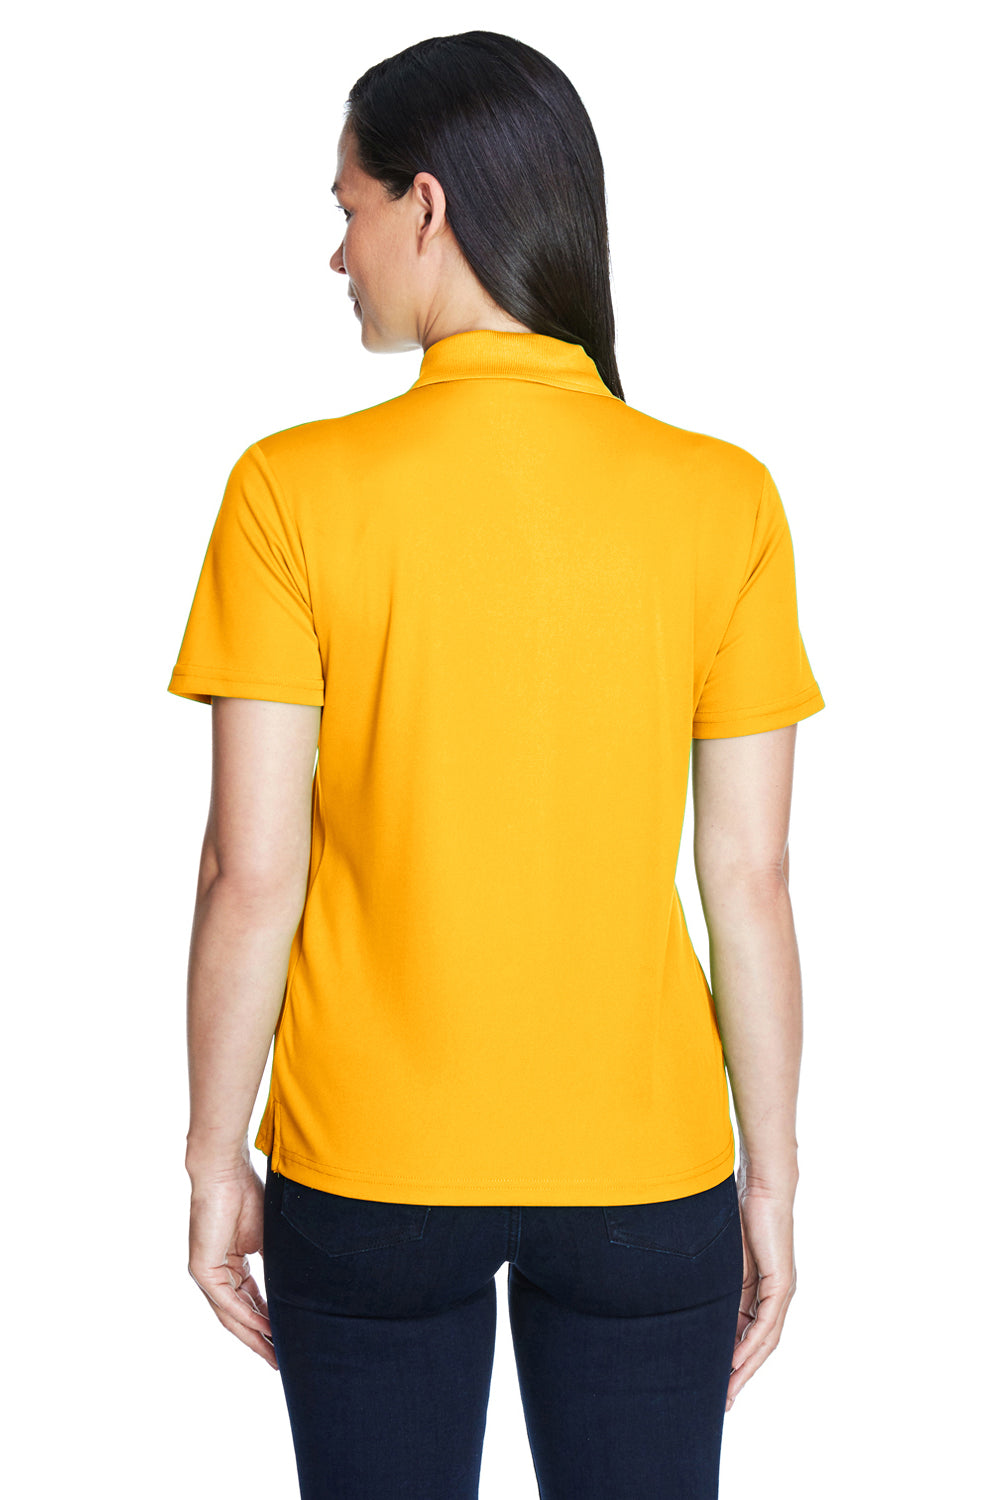 Core 365 78181 Womens Origin Performance Moisture Wicking Short Sleeve Polo Shirt Gold Back